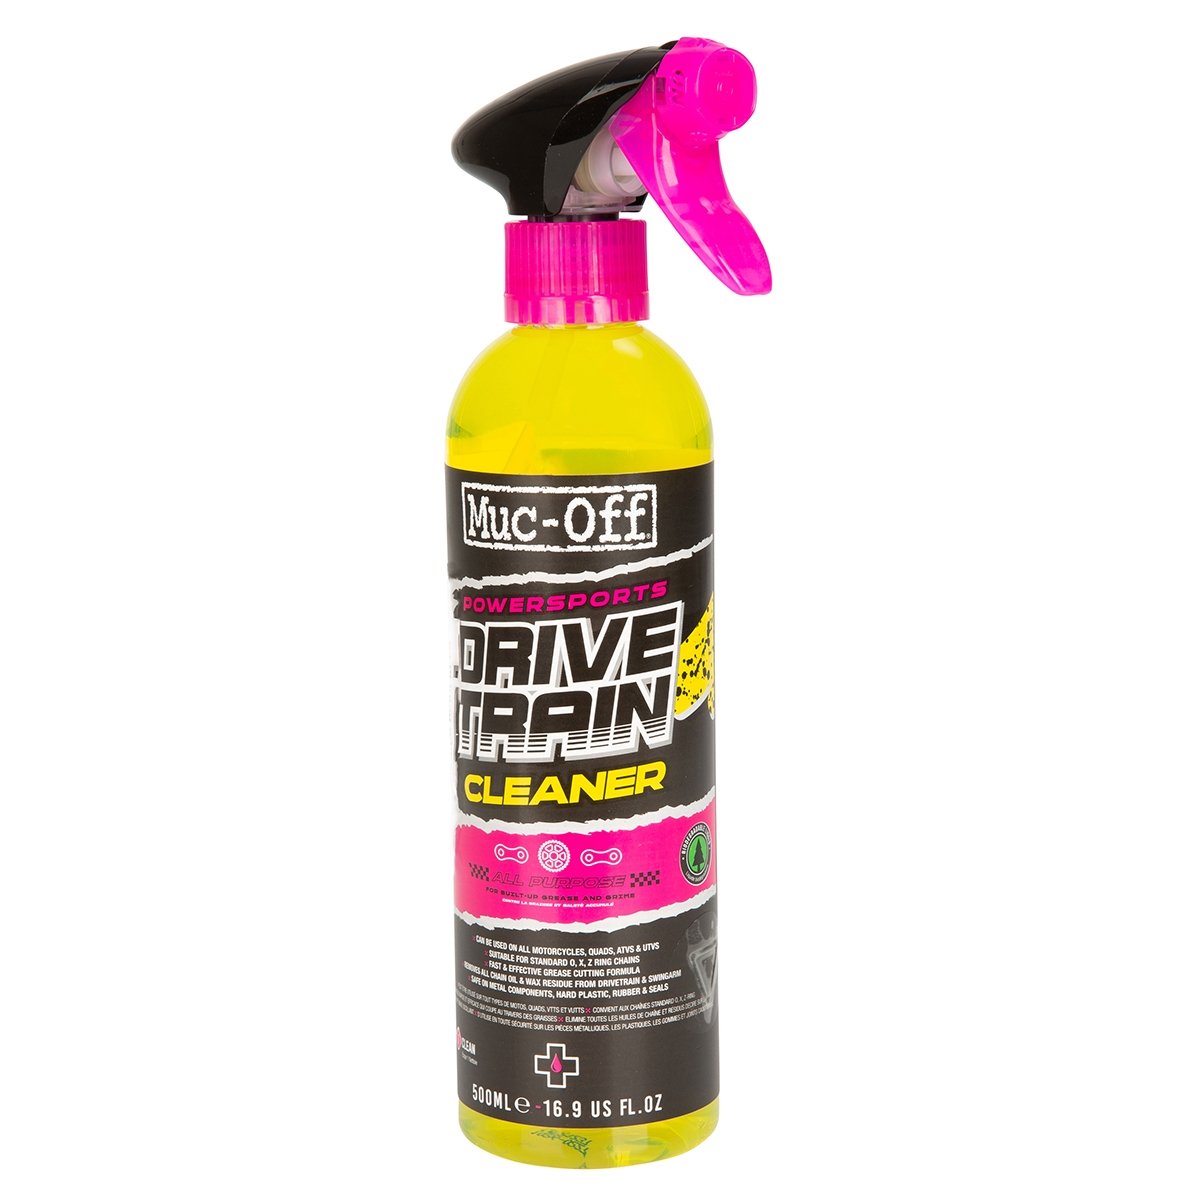 Muc-Off Drive Train Cleaner Powersports 500 ml